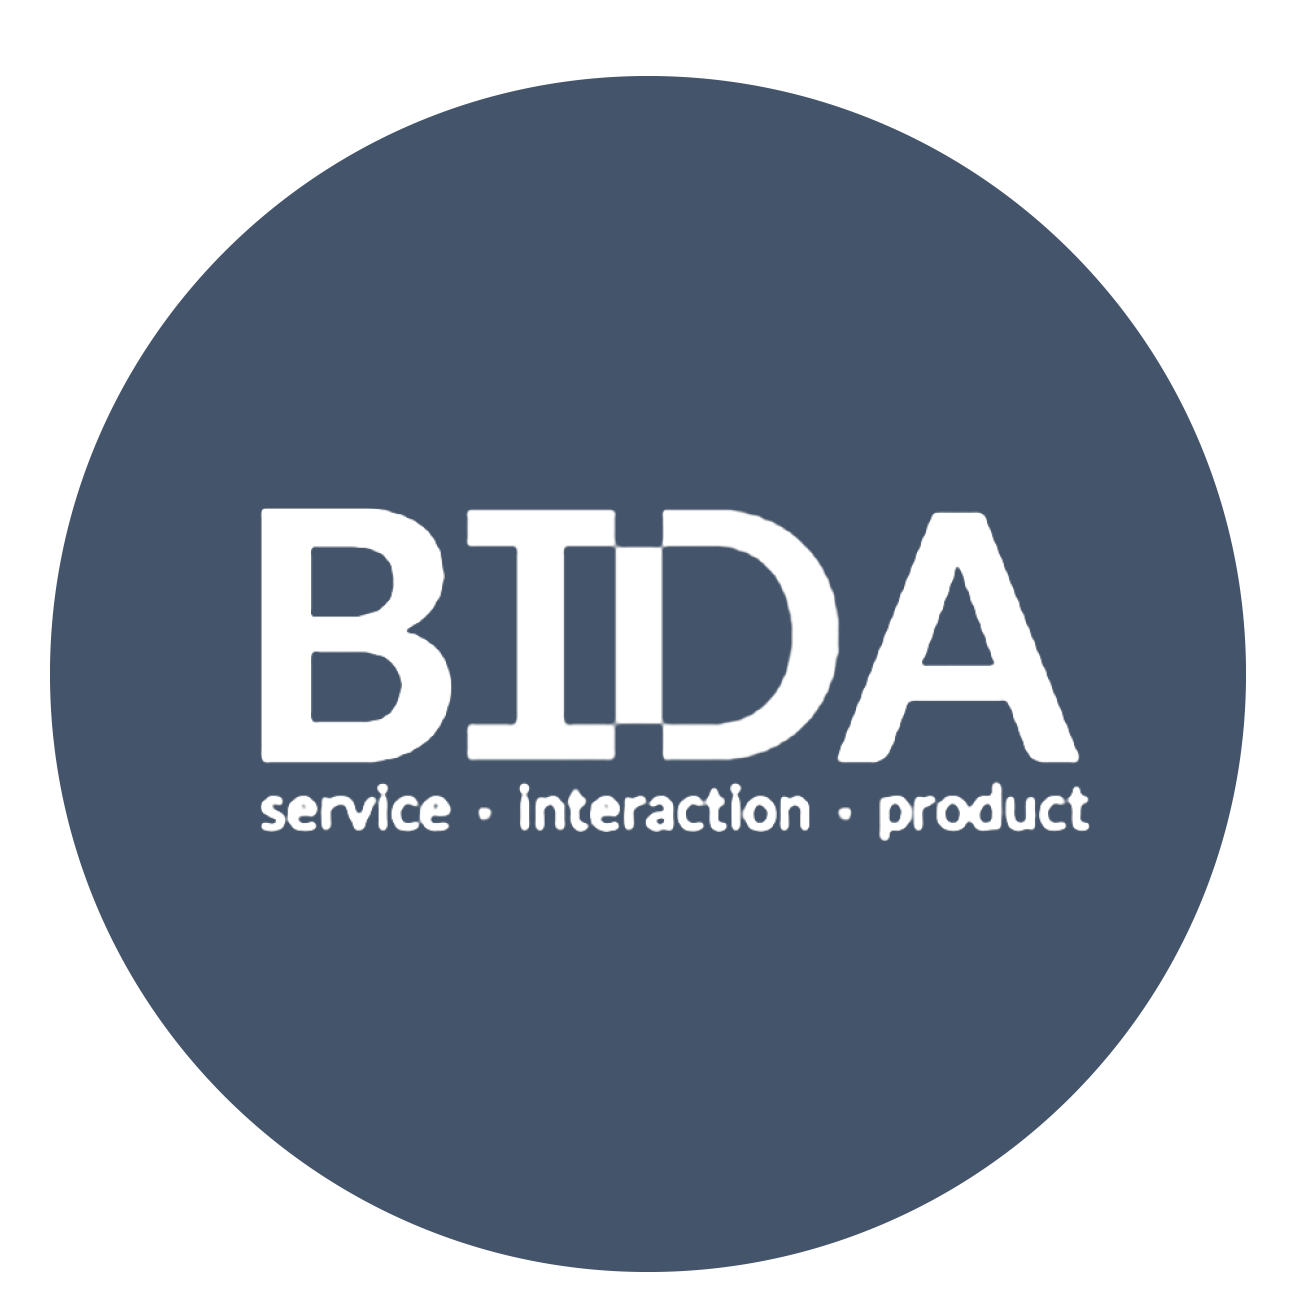 BIDA logo in white and in blue circle